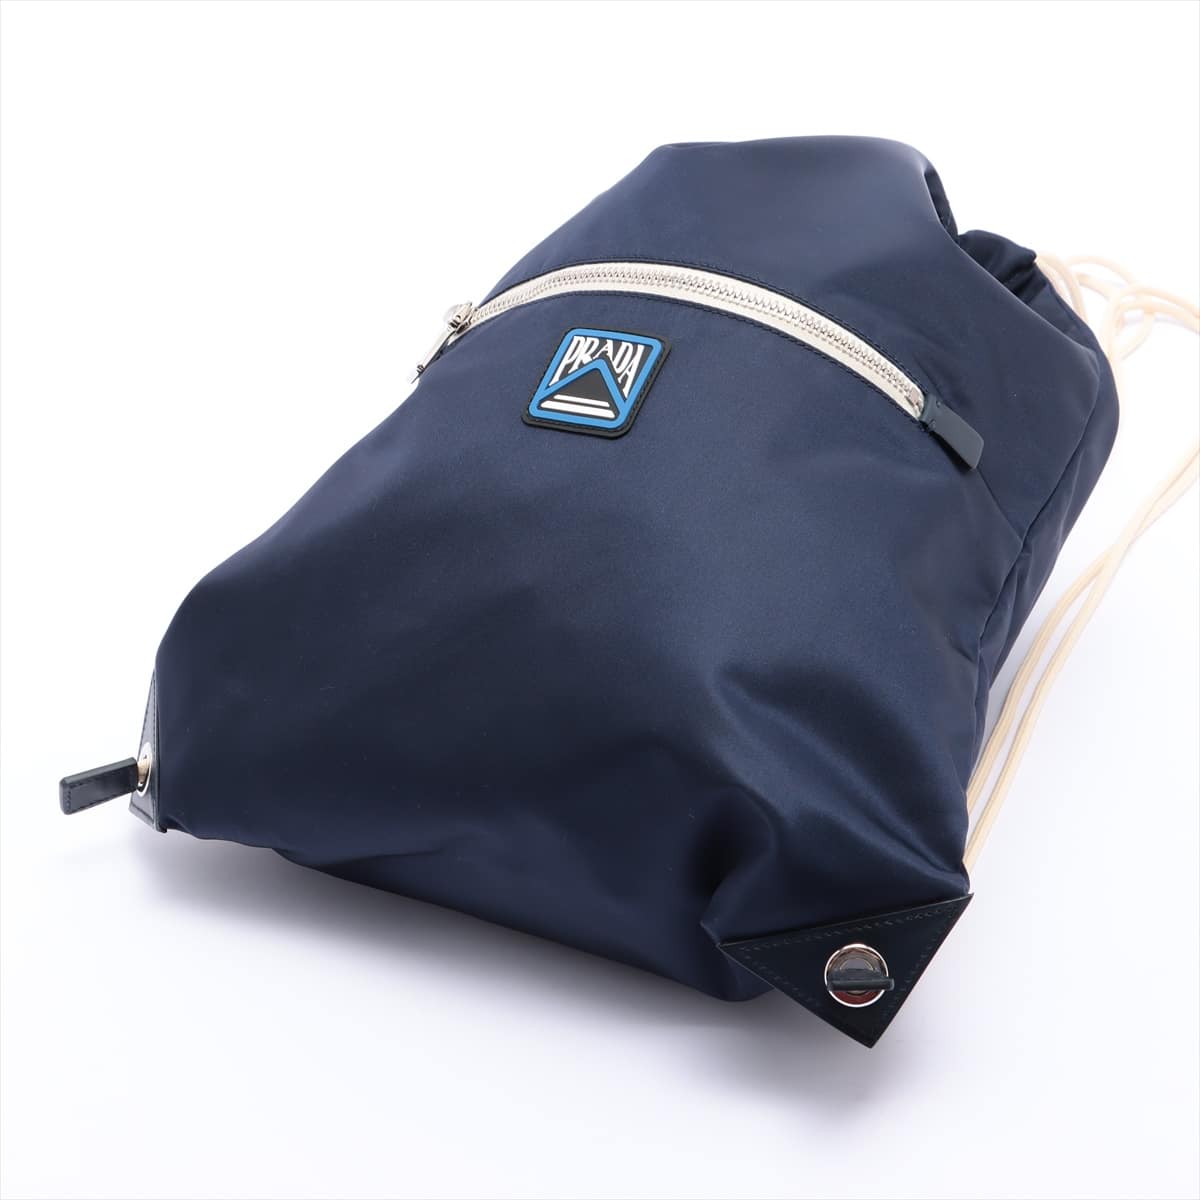 Prada Tessuto Backpack Navy blue 2VZ030 open papers